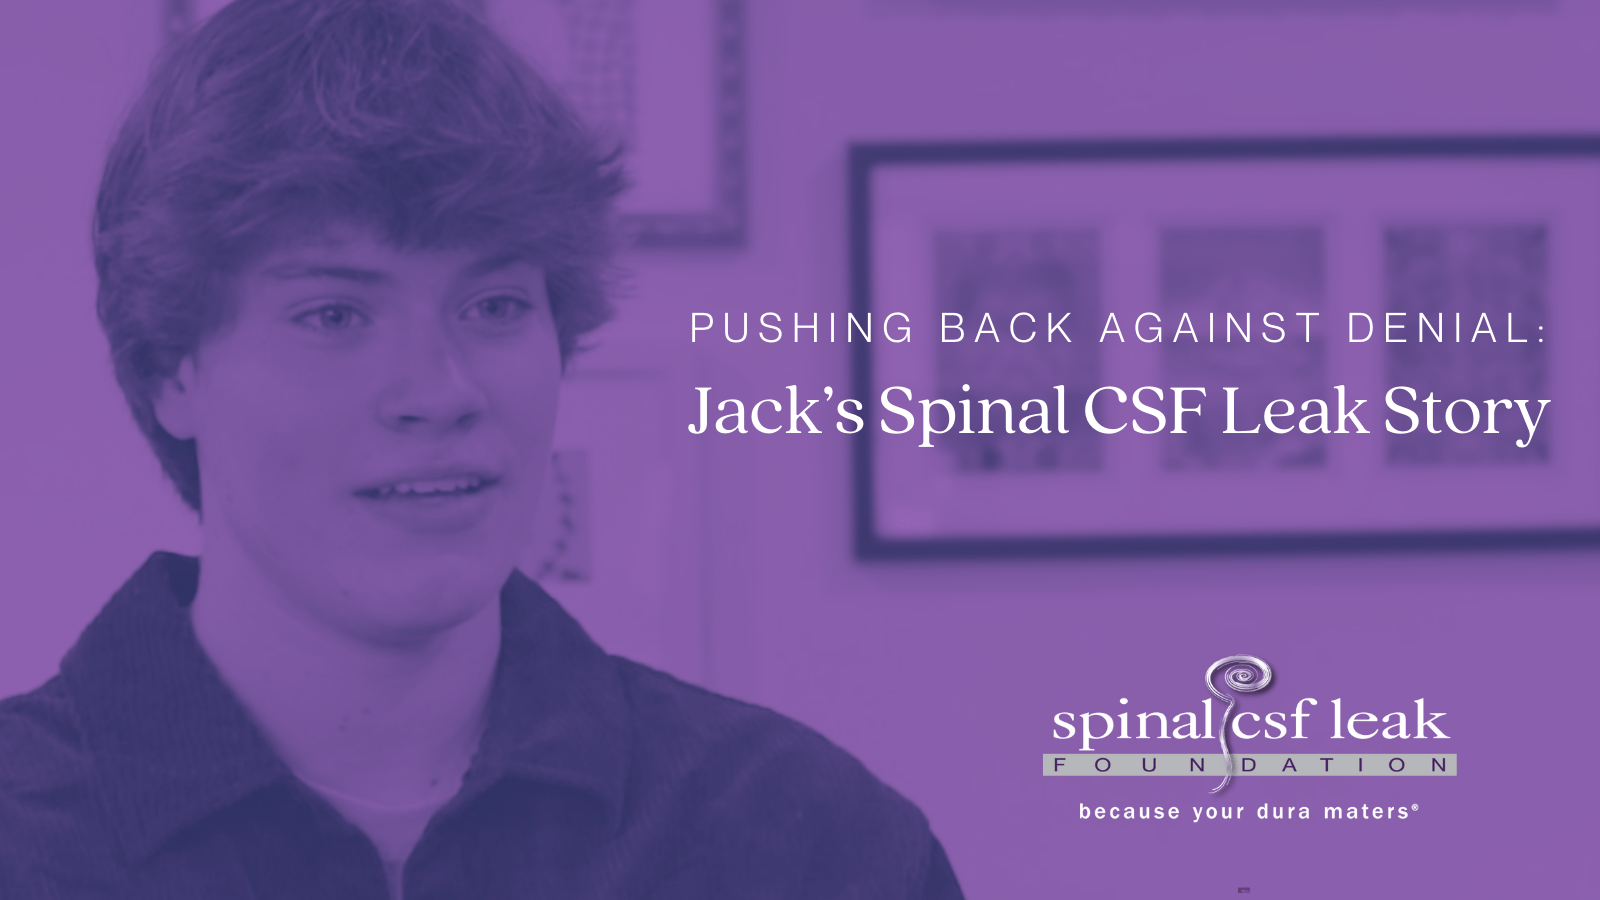 Pushing back against denial: Jack’s spinal CSF leak story